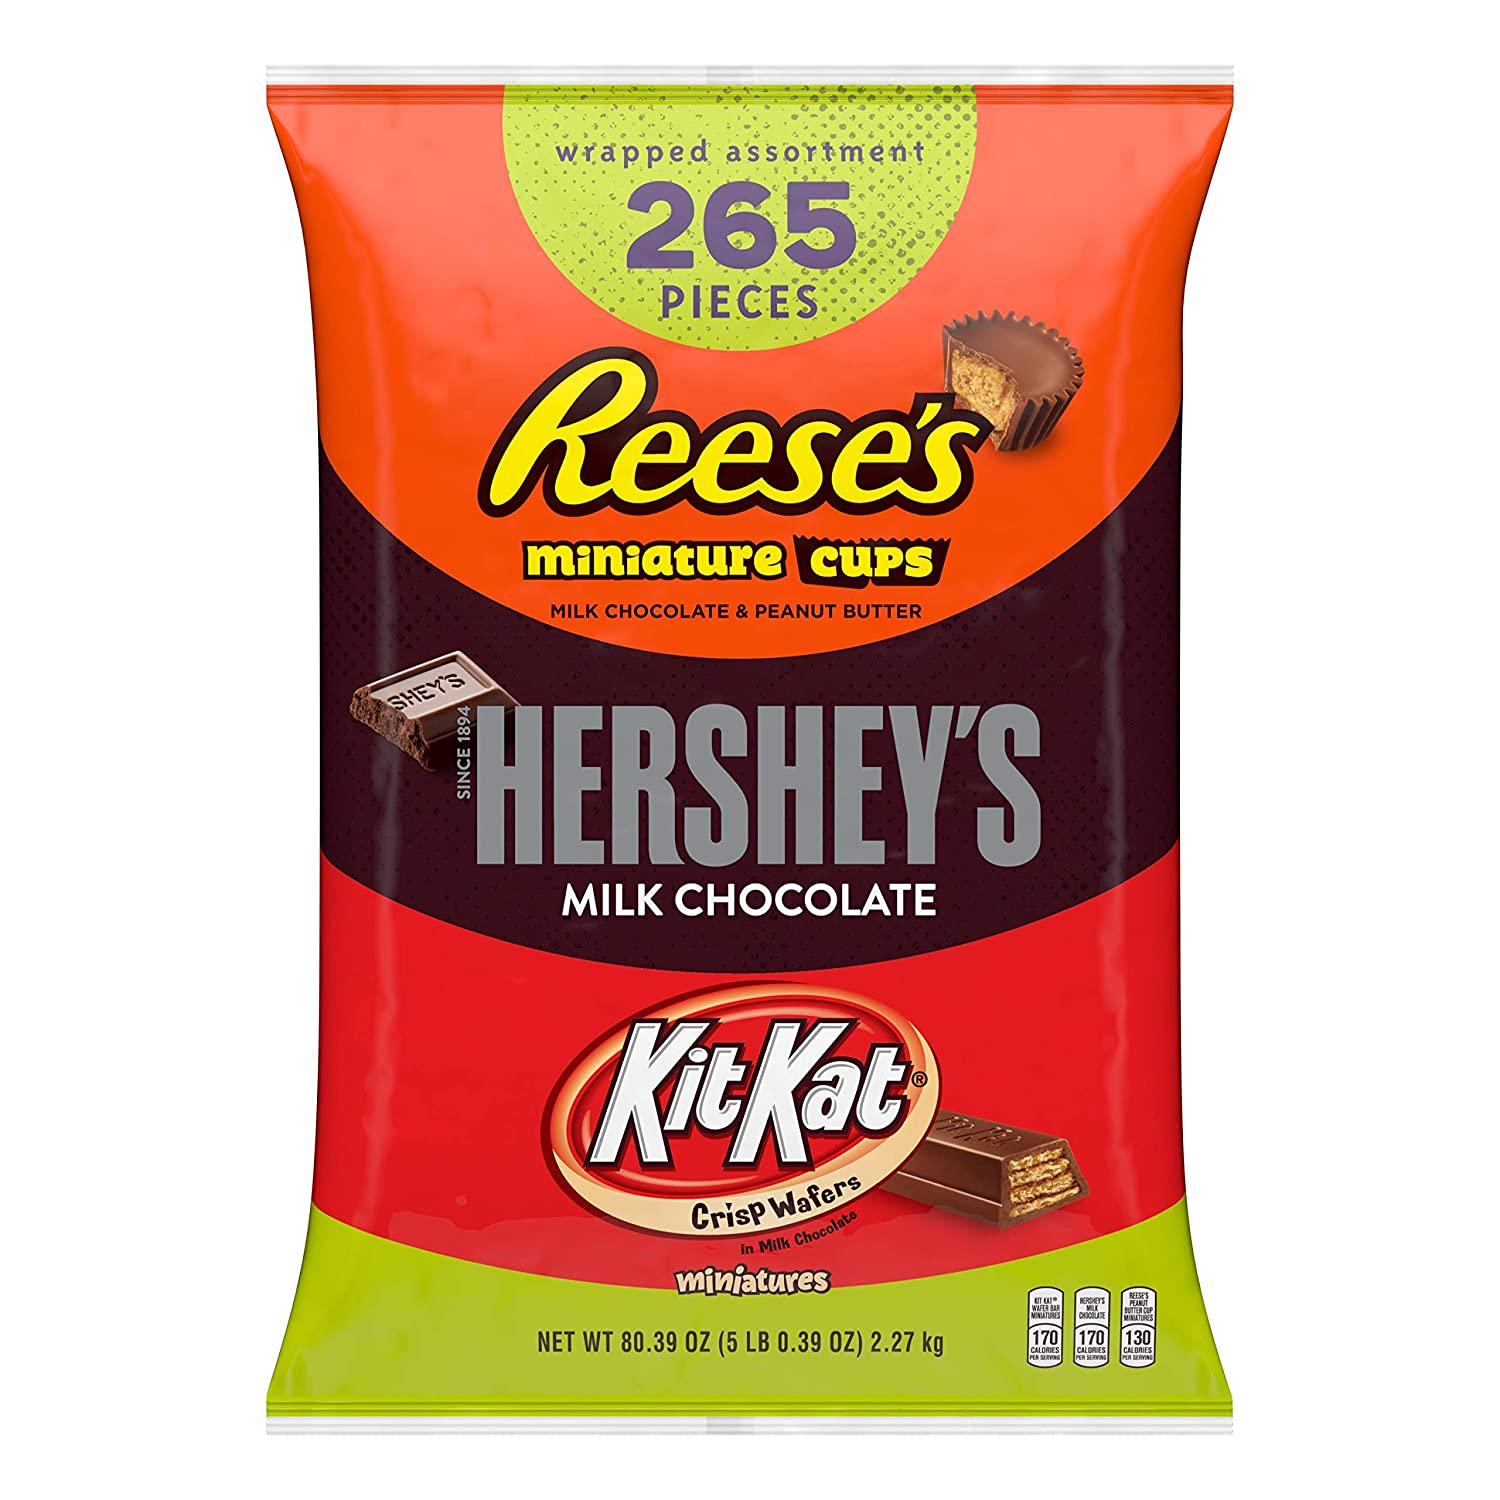 Amazon.com : REESE'S, HERSHEY'S and KIT KAT Assorted Milk Chocolate Miniatures Candy, Bulk, 80.39 oz Bulk Variety Bag (265 Pieces) : Grocery & Gourmet Food $16.8